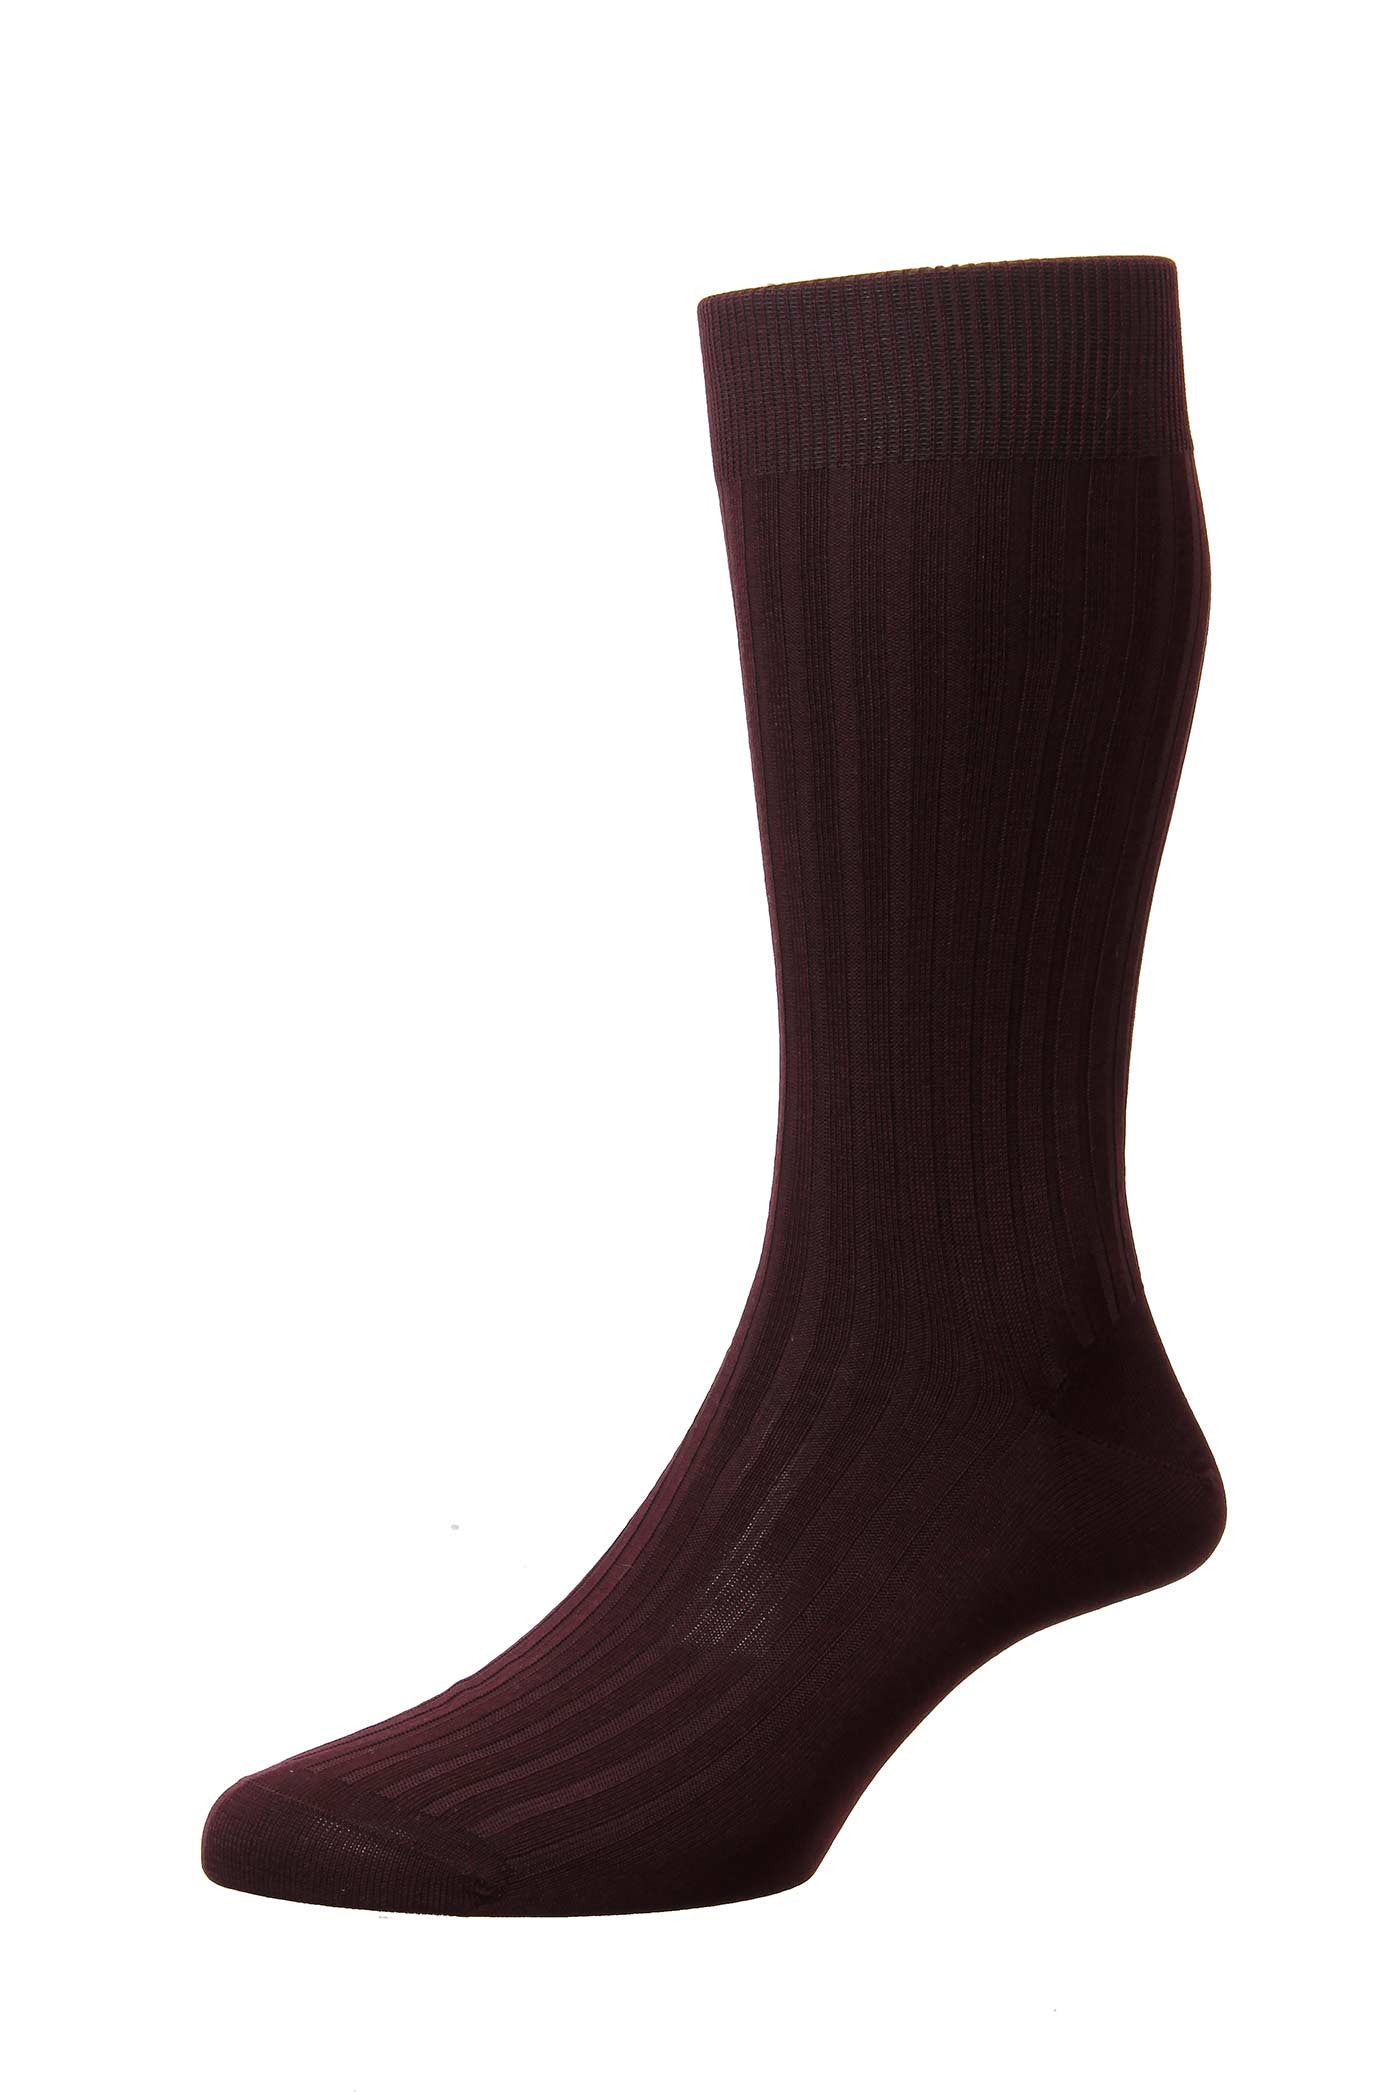 Men's Socks - Danvers (5614) 5x3 Rib Fil d'Ecosse / Cotton Lisle - BURGUNDY